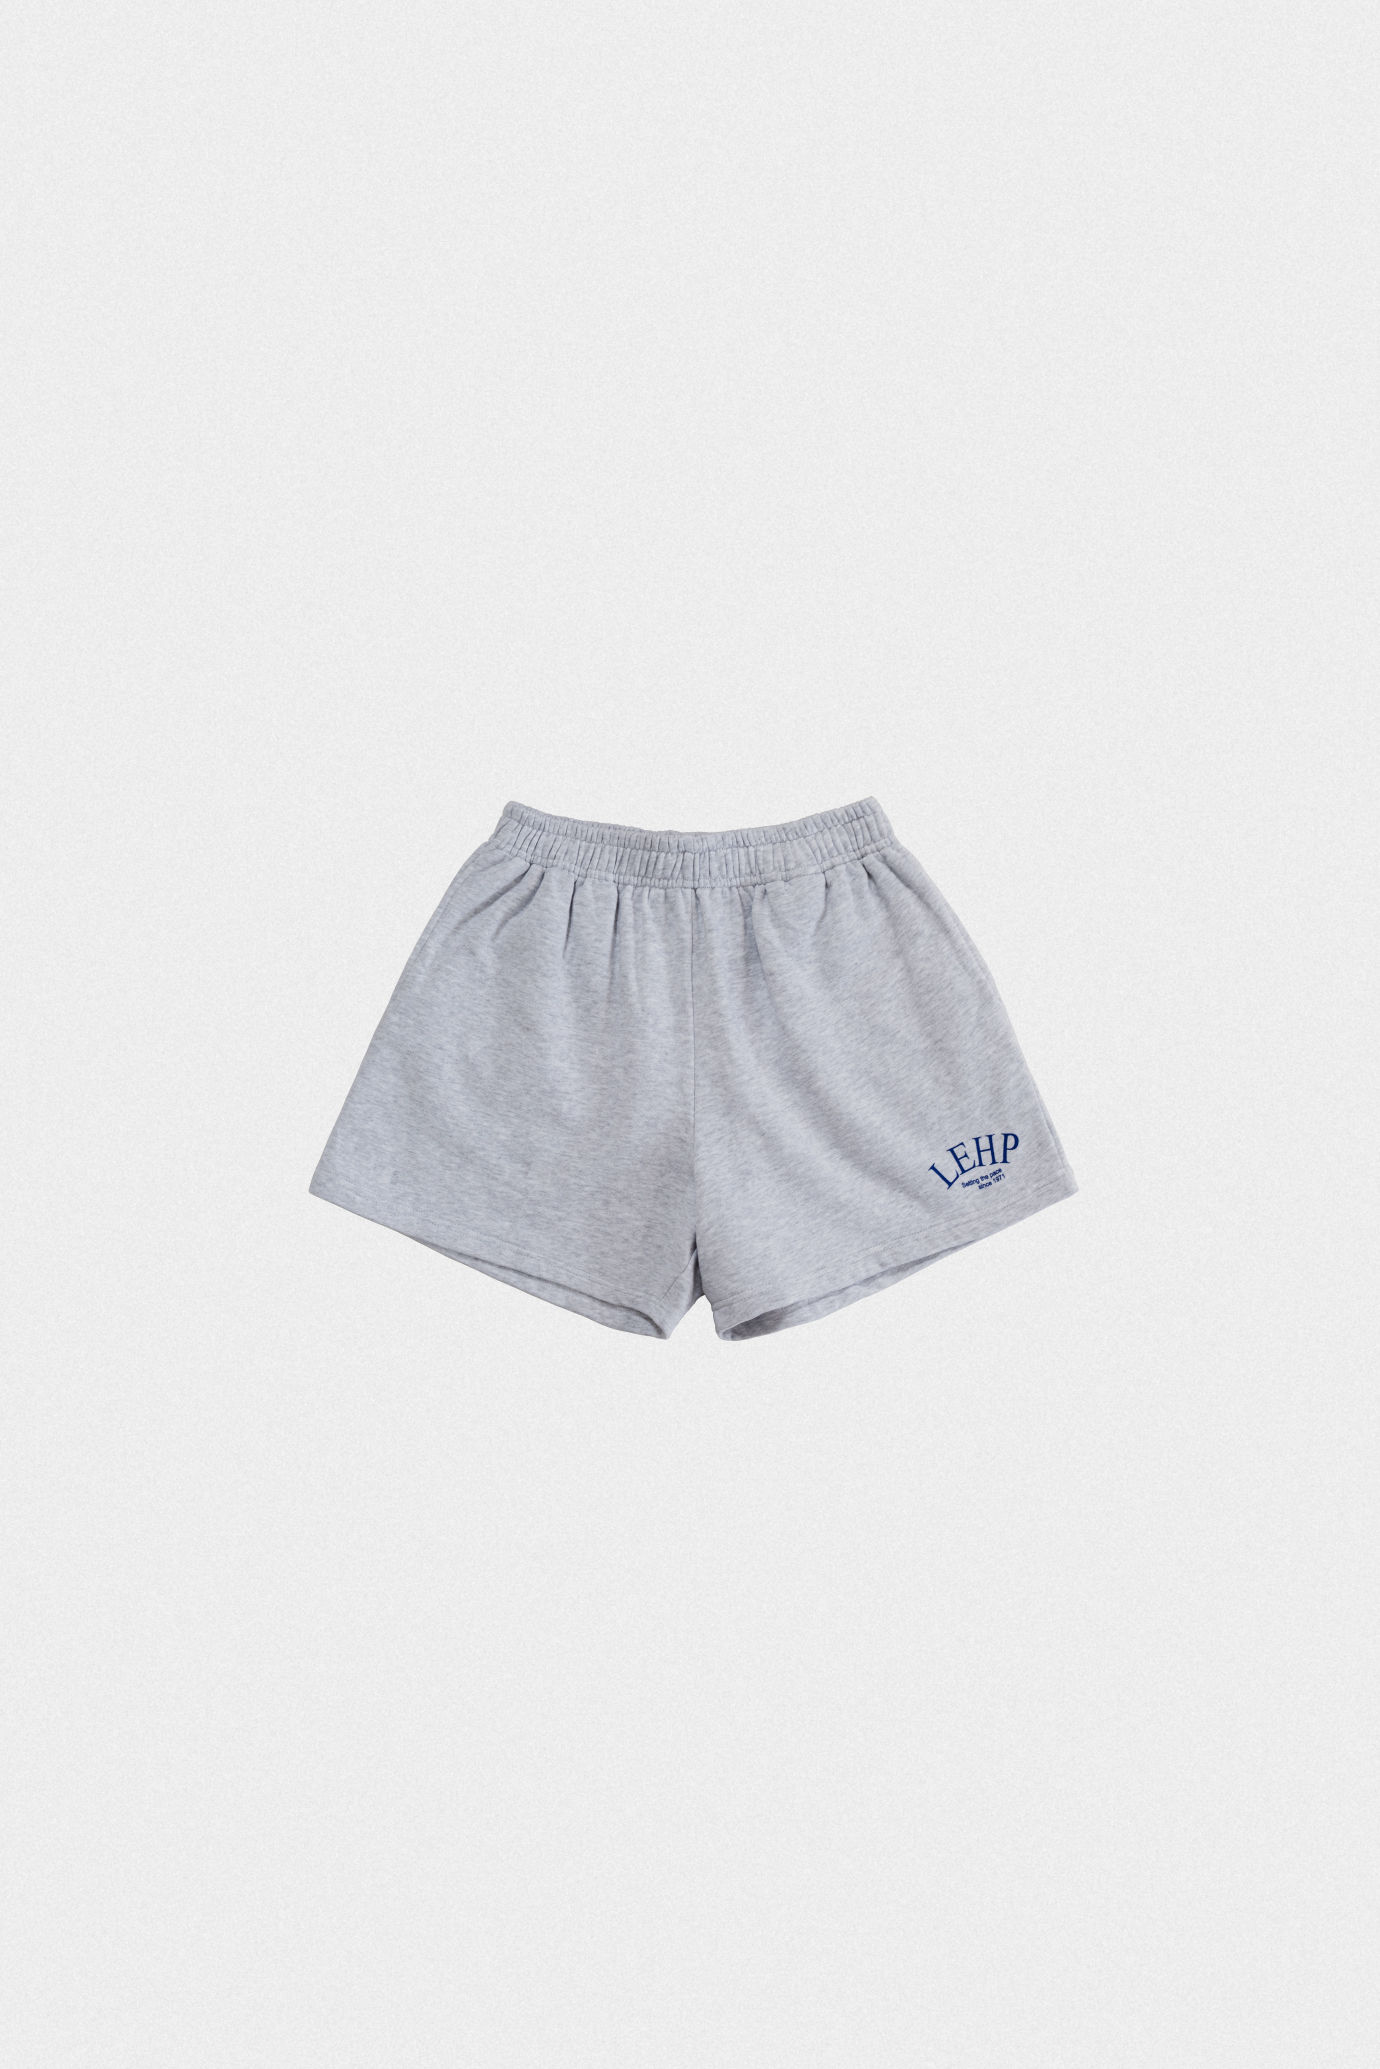 19791_LEHP shorts [ New Season / 10% DC ] 4일 PM 5 마감